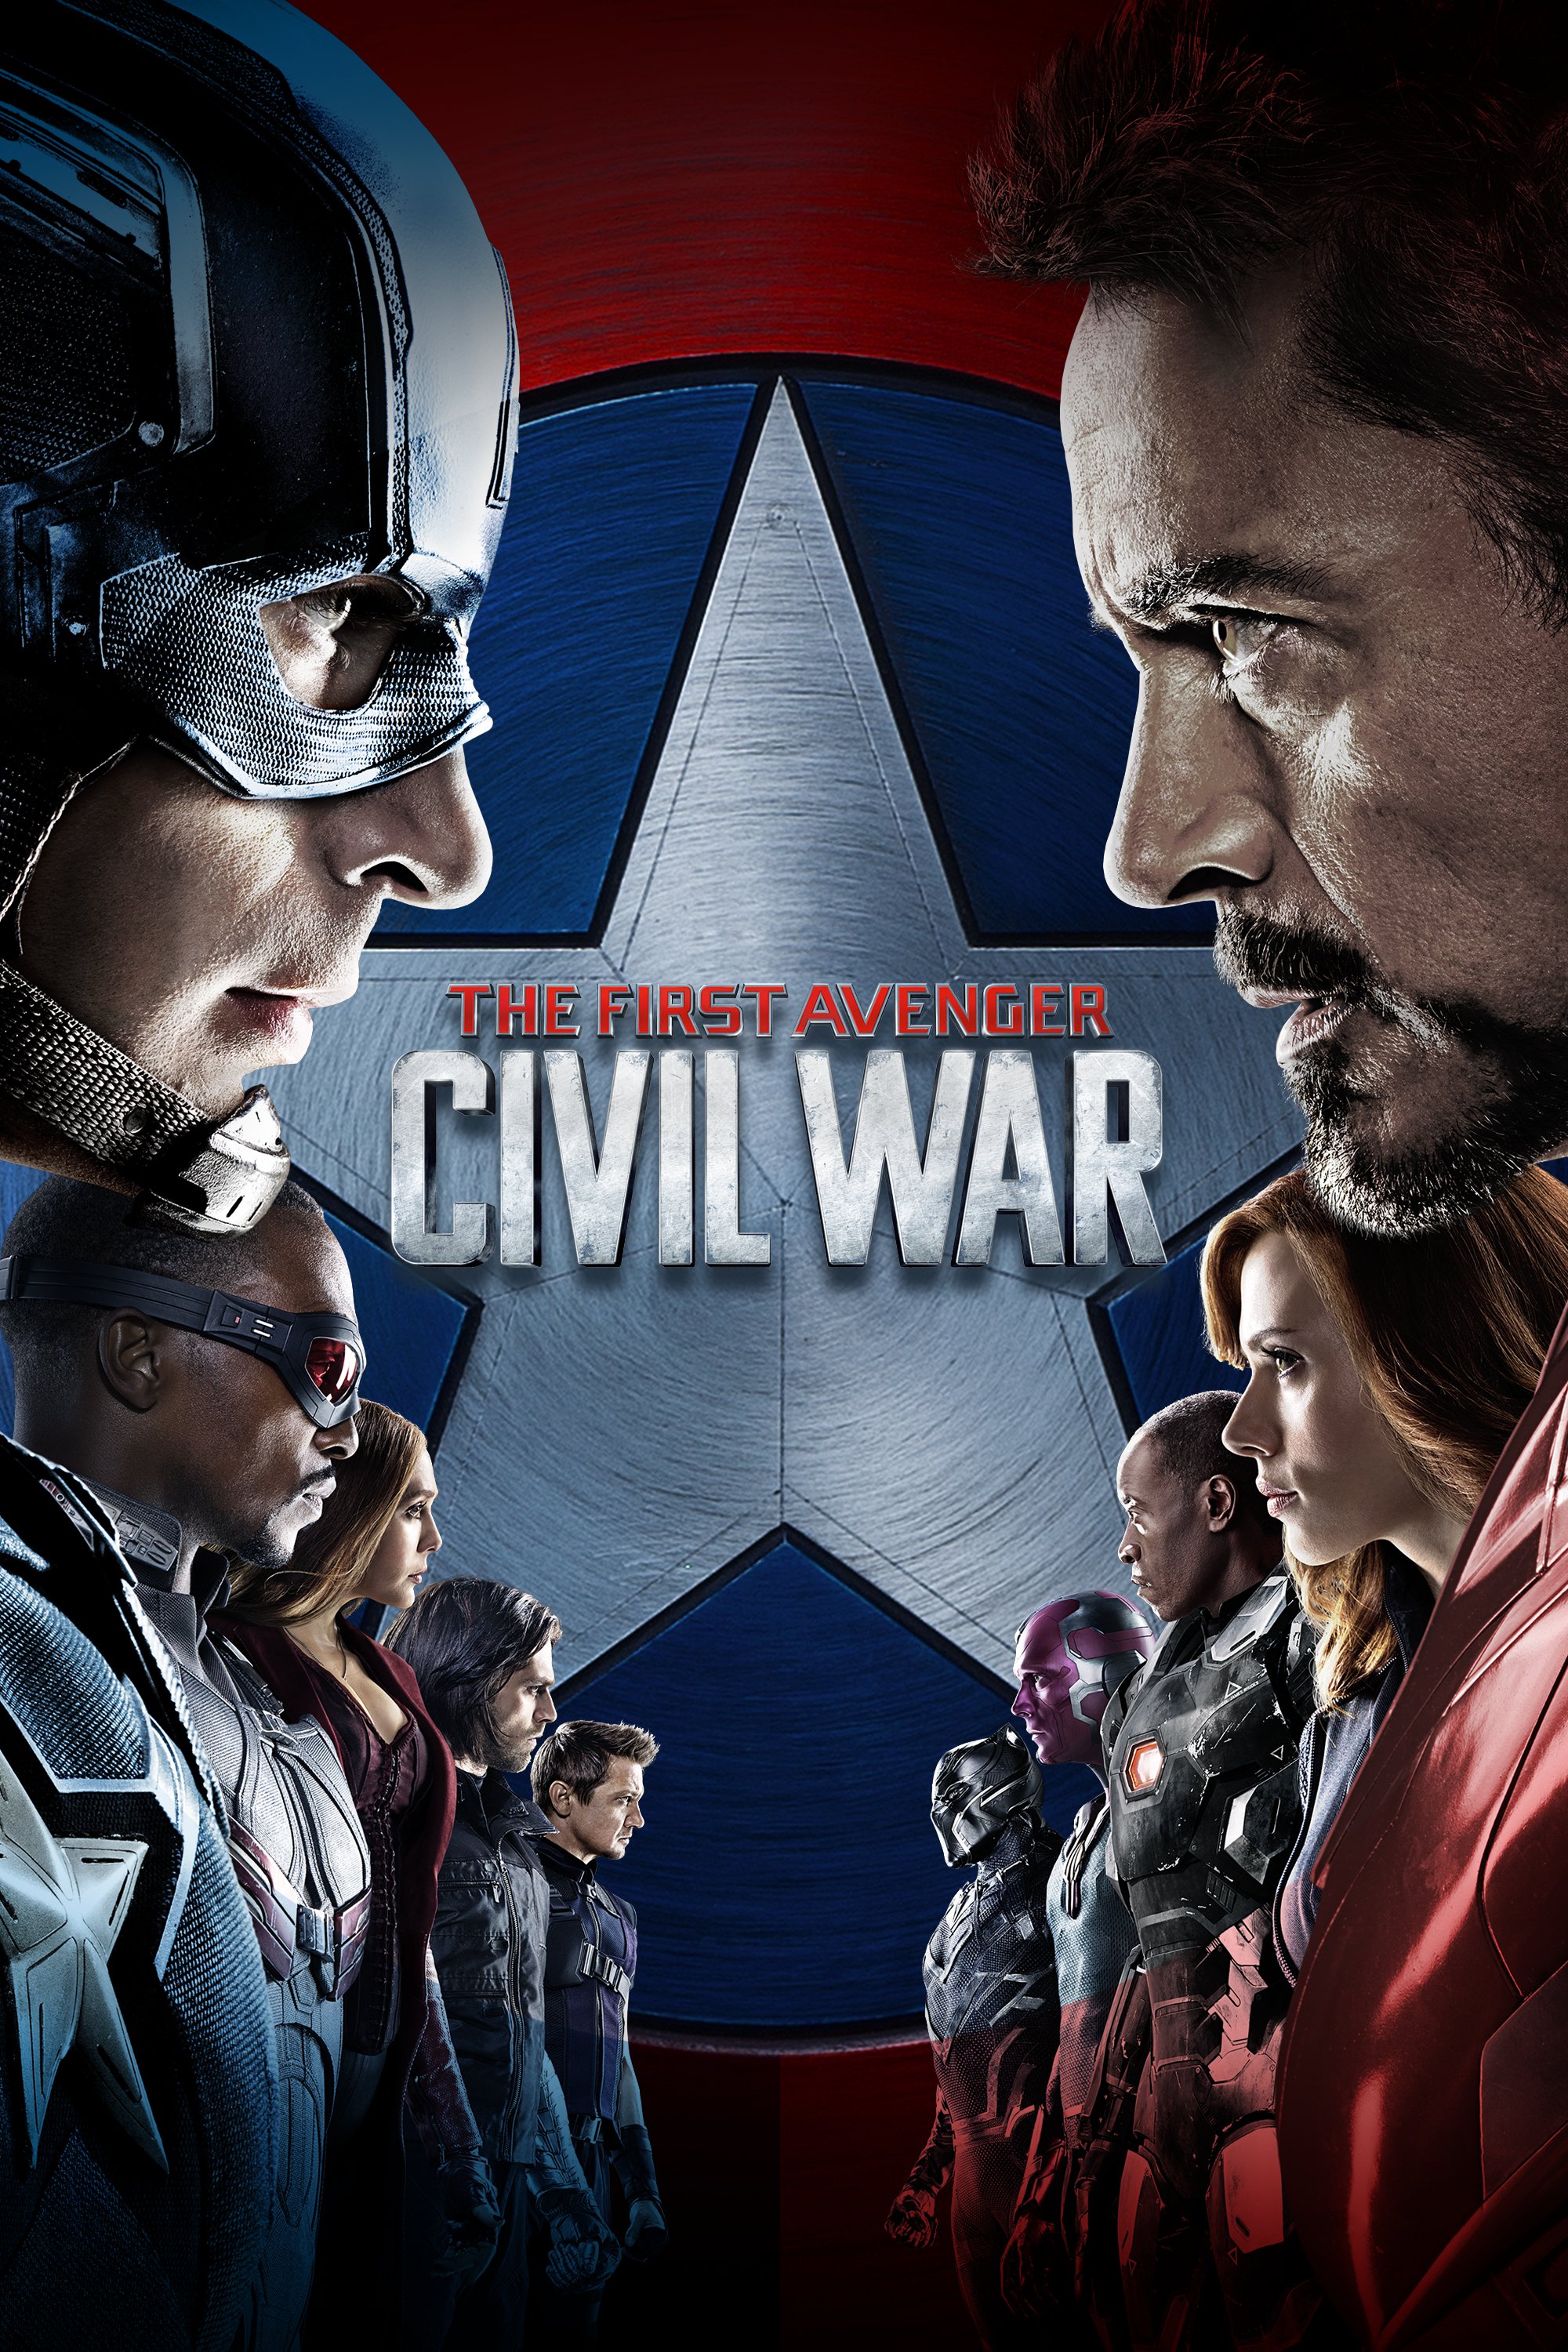 Plakat von "The First Avenger: Civil War"